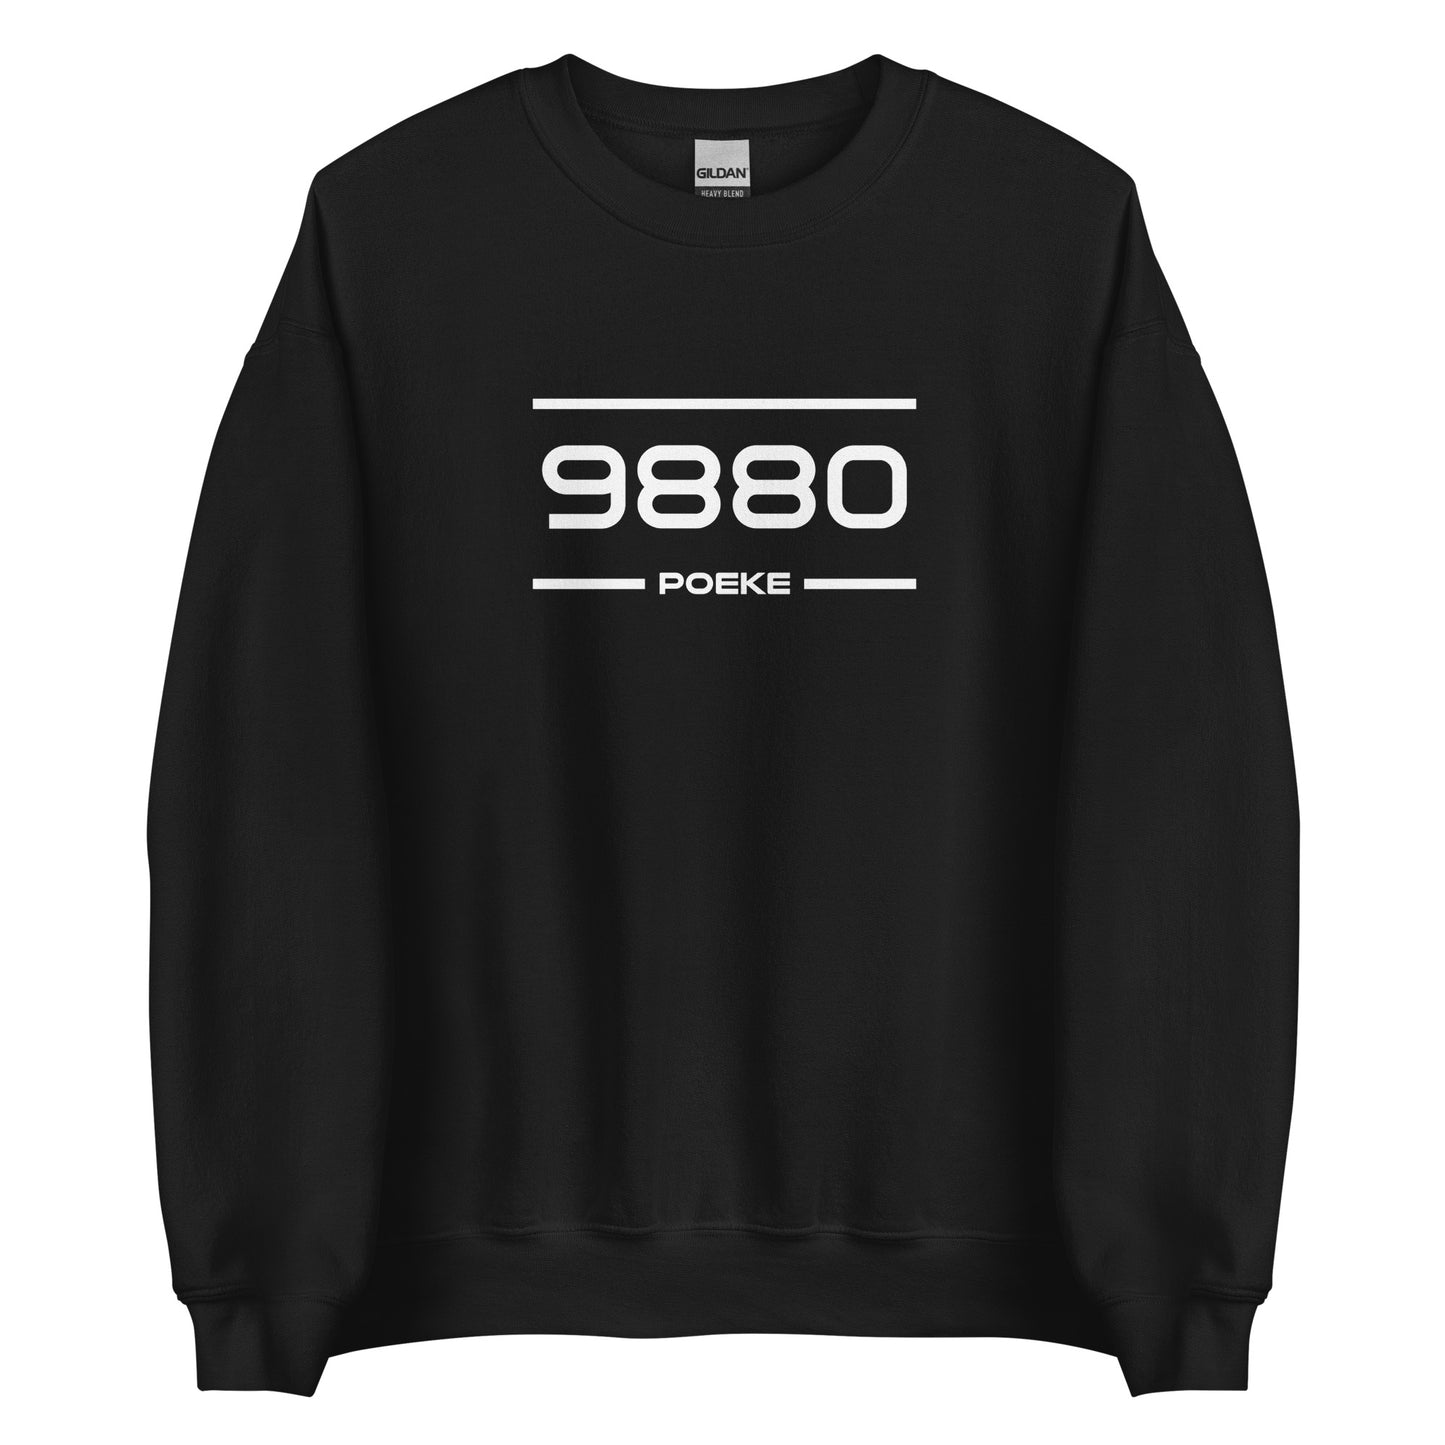 Sweater - 9880 - Poeke (M/V)